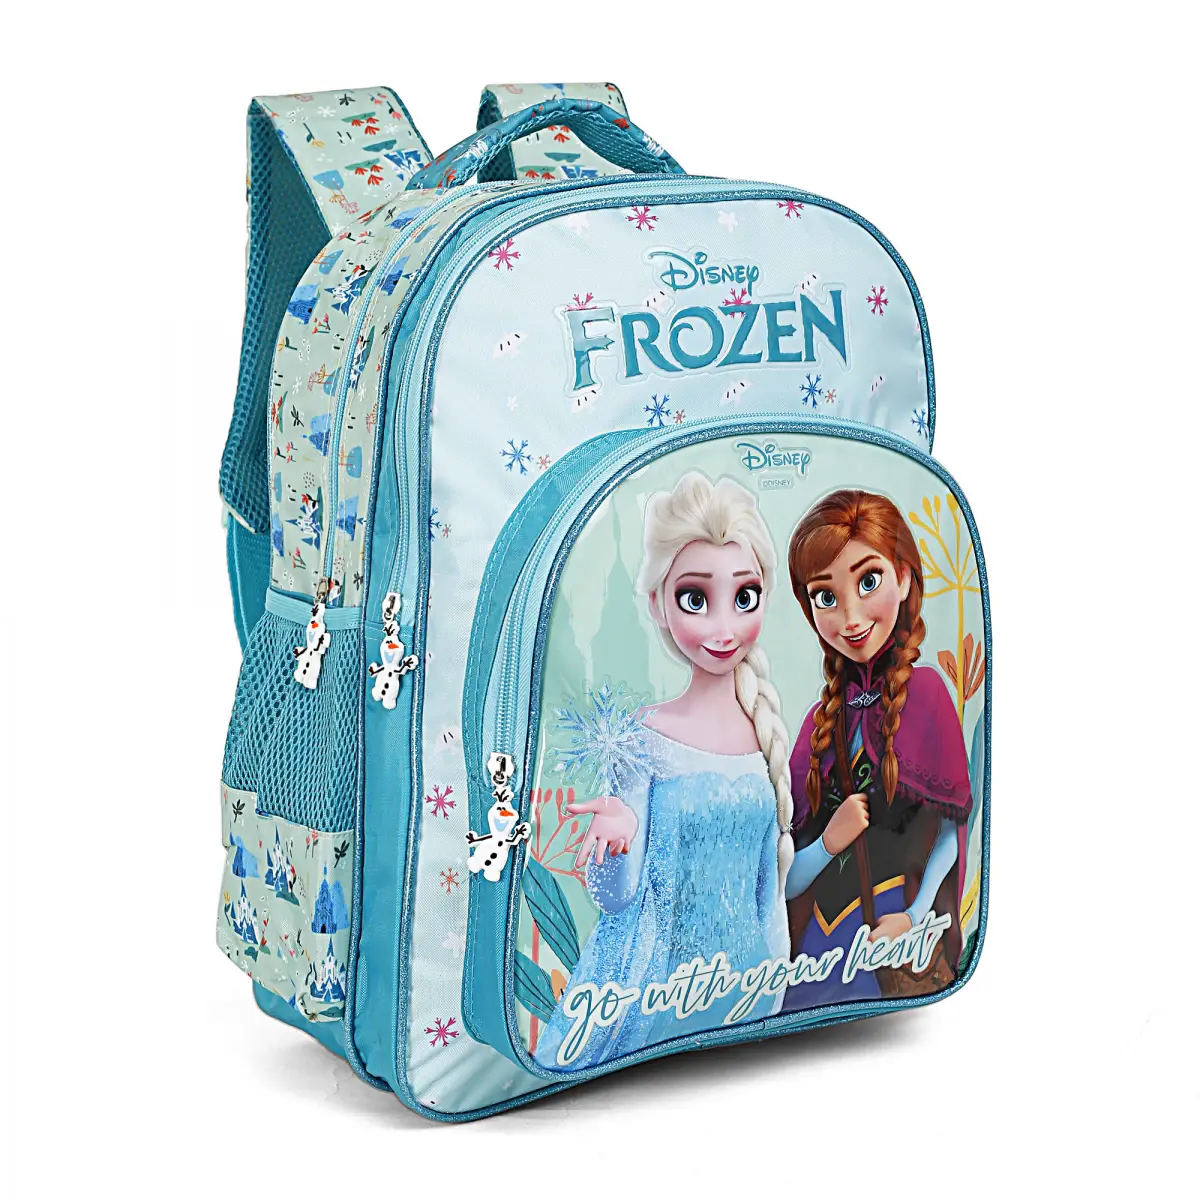 Disney Frozen Heart Bag Pack, 16Inches, Multicolour